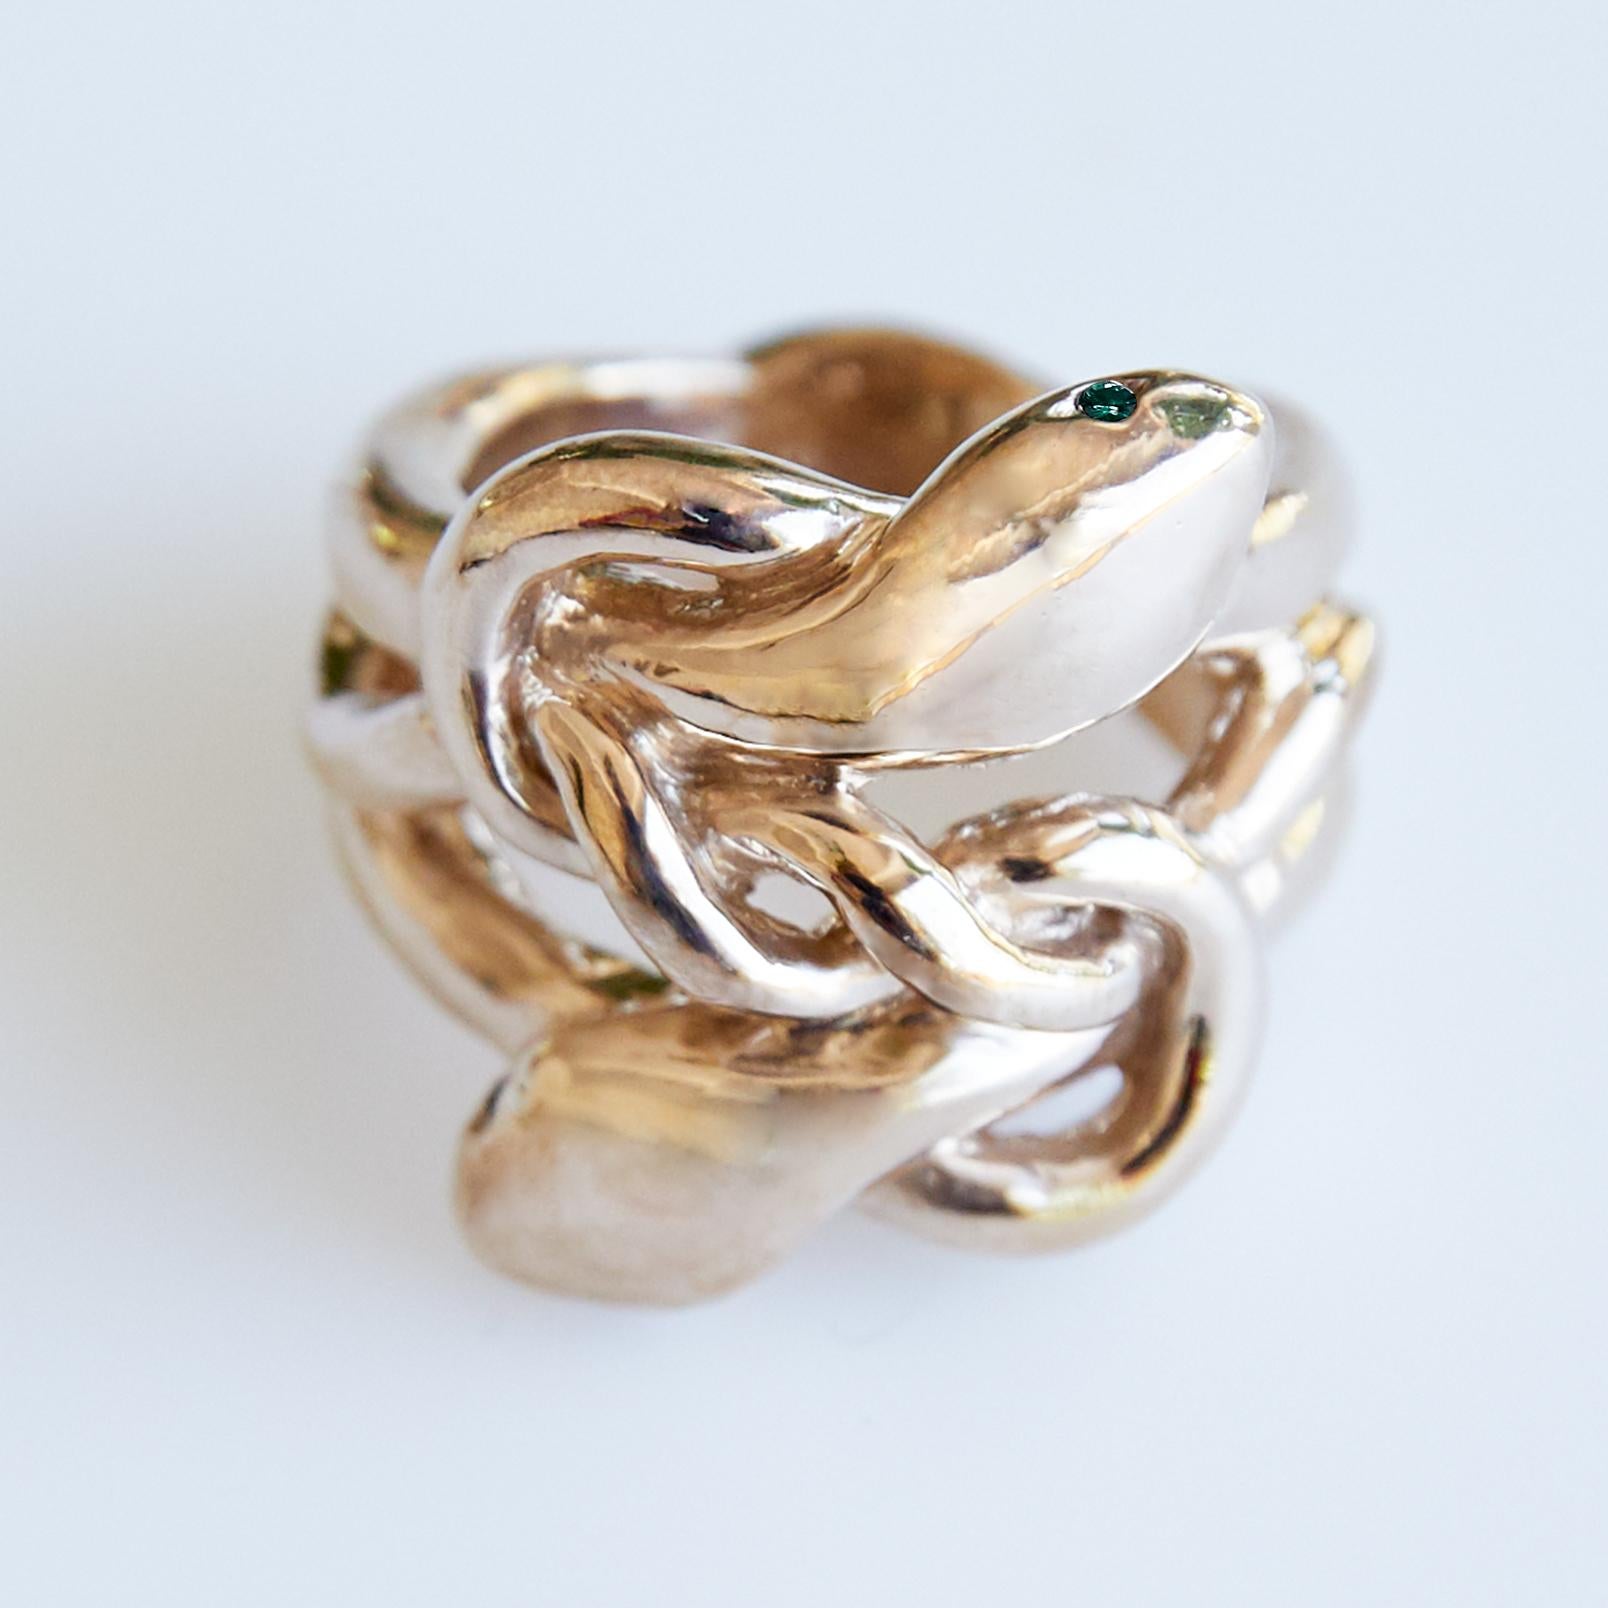 Emerald Gold Snake Ring Victorian Style J Dauphin
J DAUPHIN 